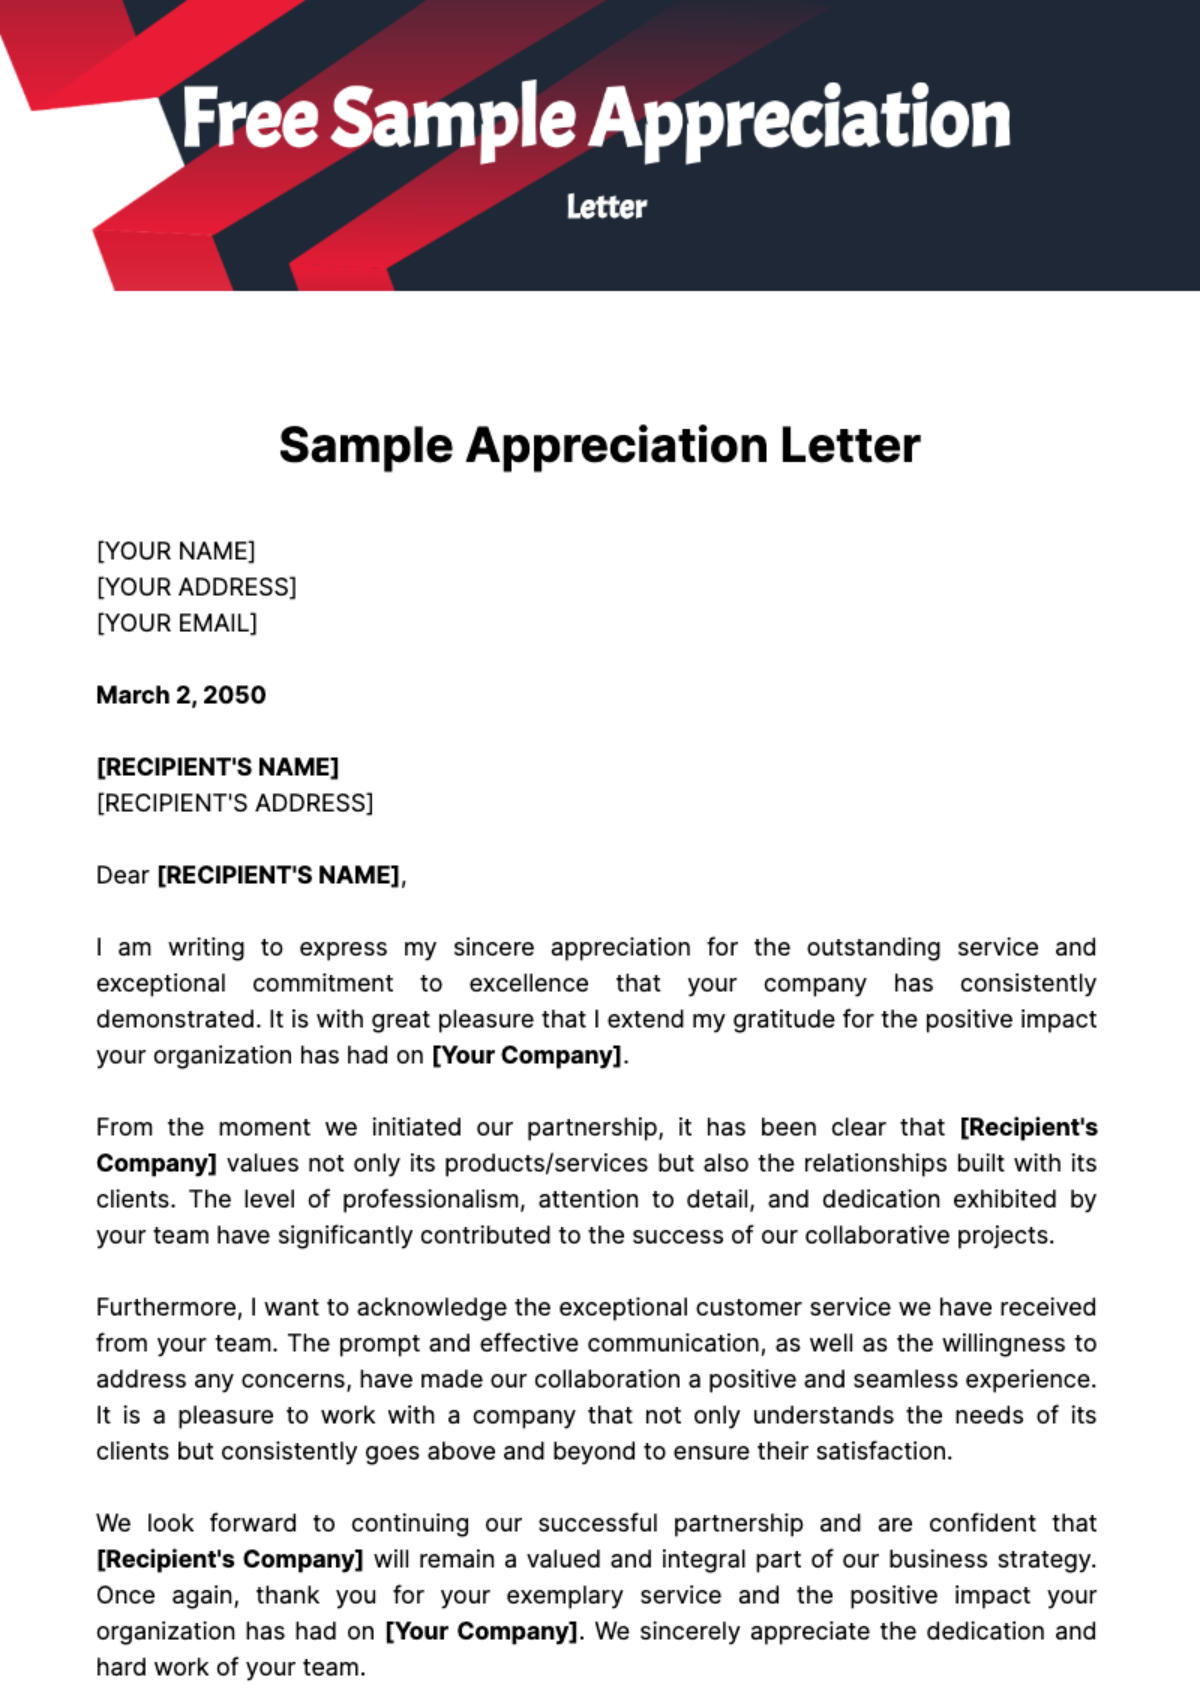 Free Sample Appreciation Letter Template